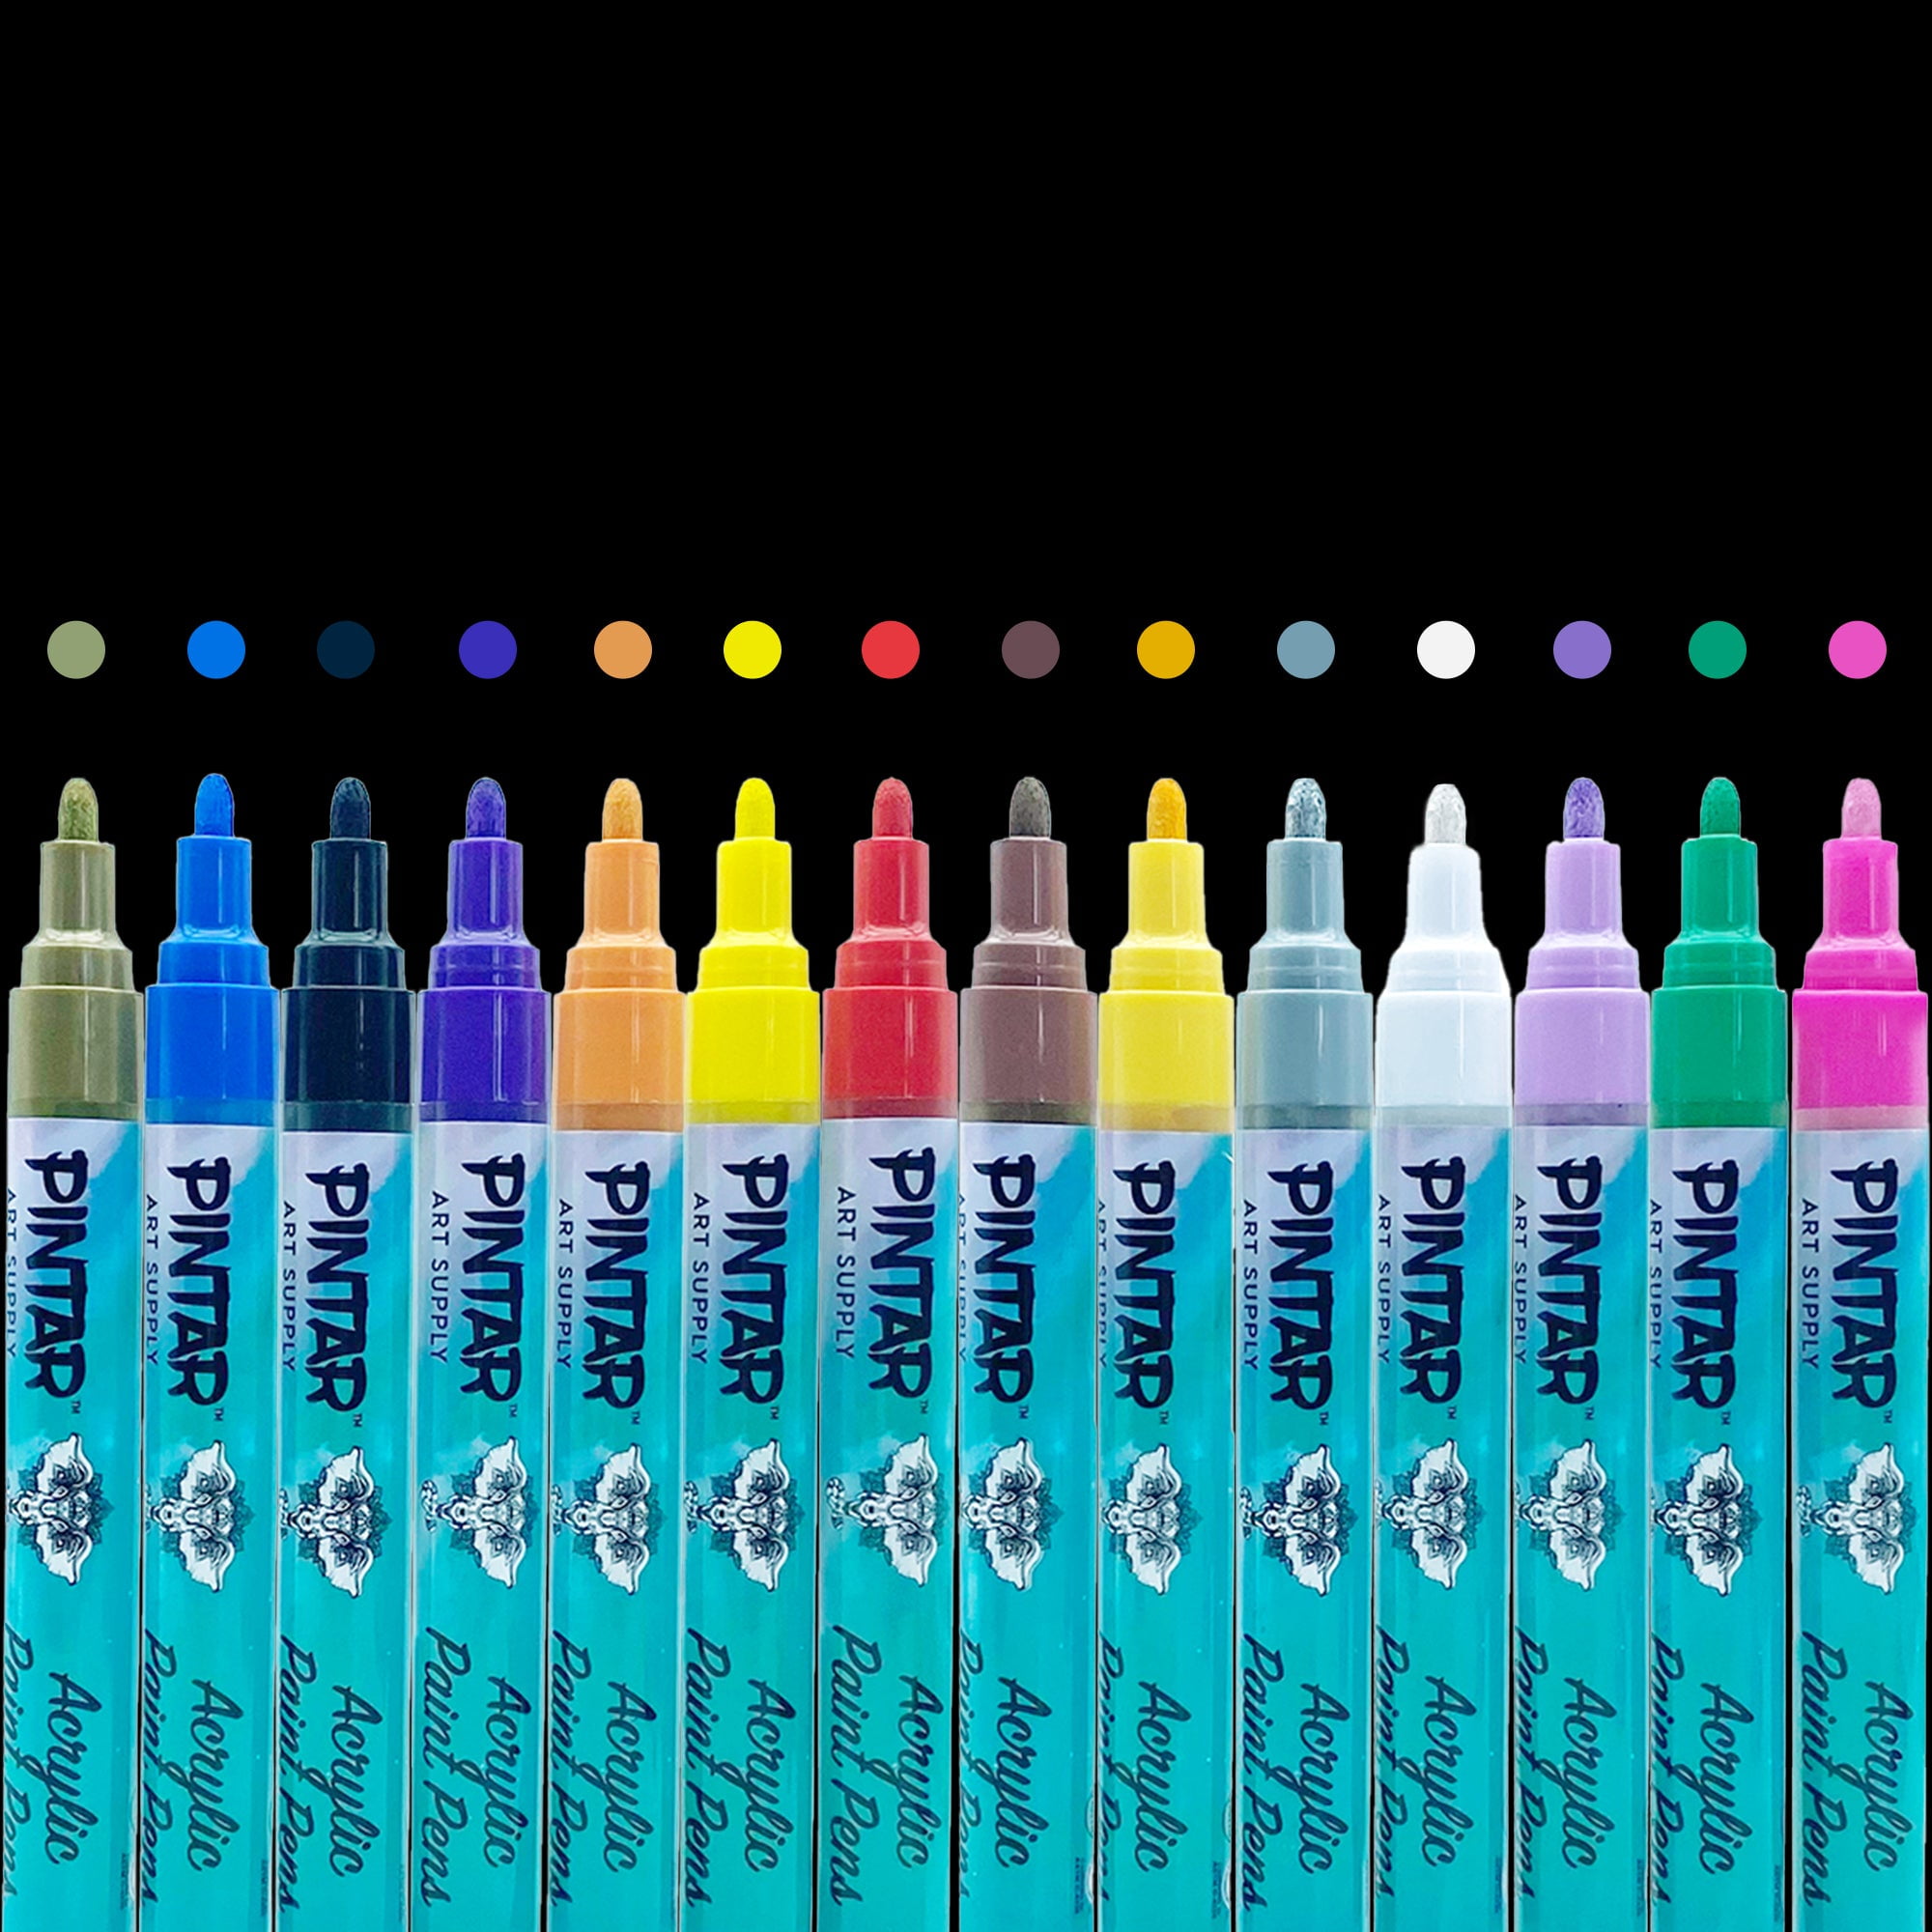 PINTAR Oil Based Paint Pens - 20 Medium Tip & 4 Fine Tip Colored